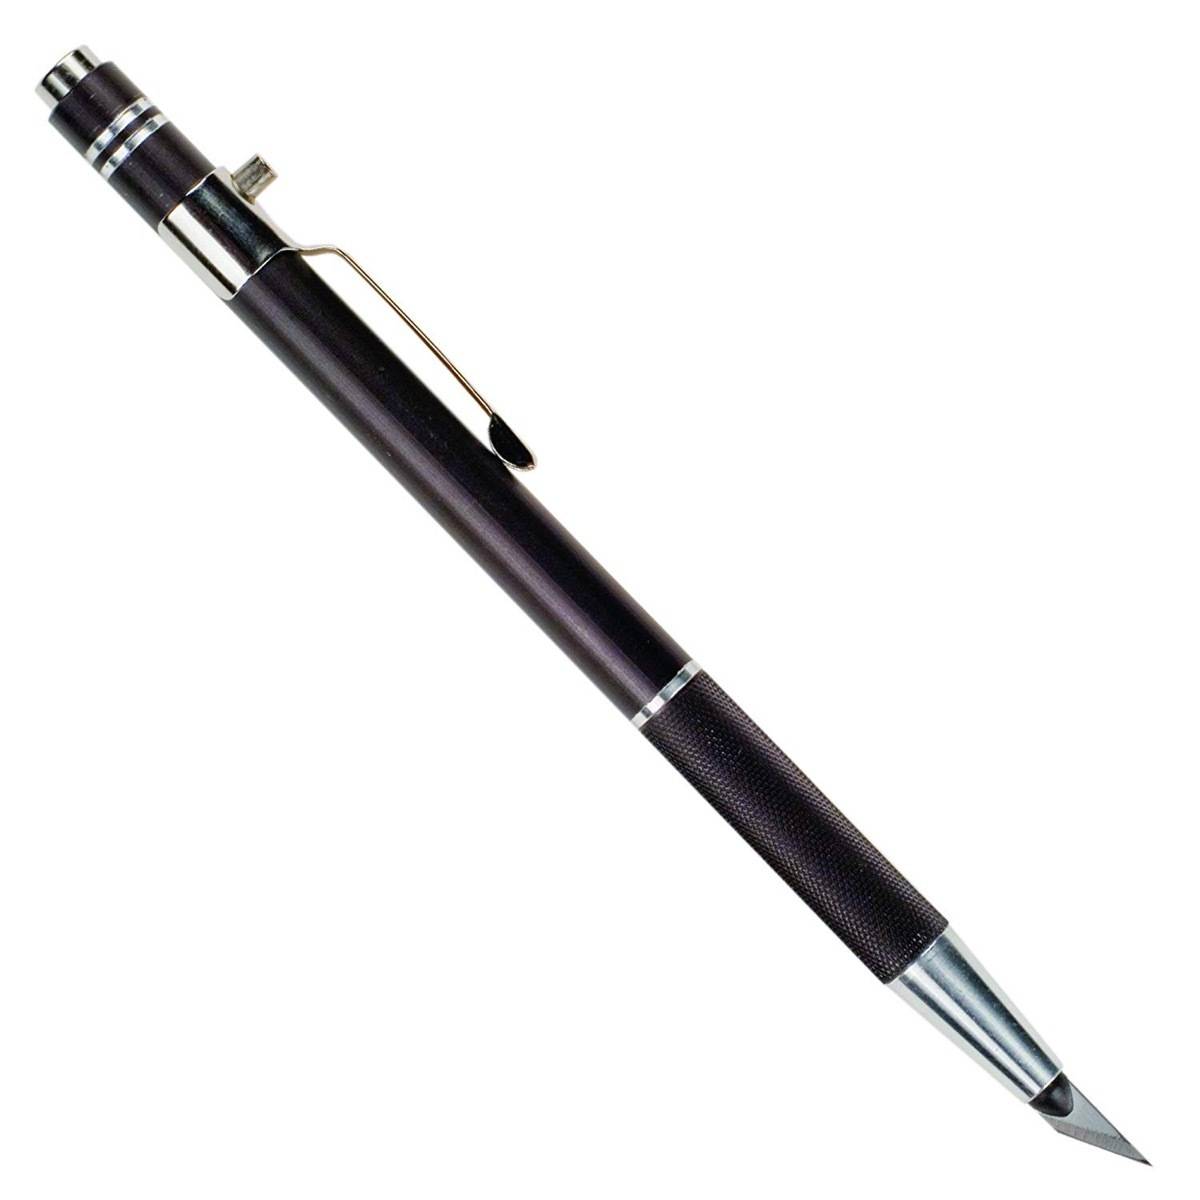 Pen cutting tool